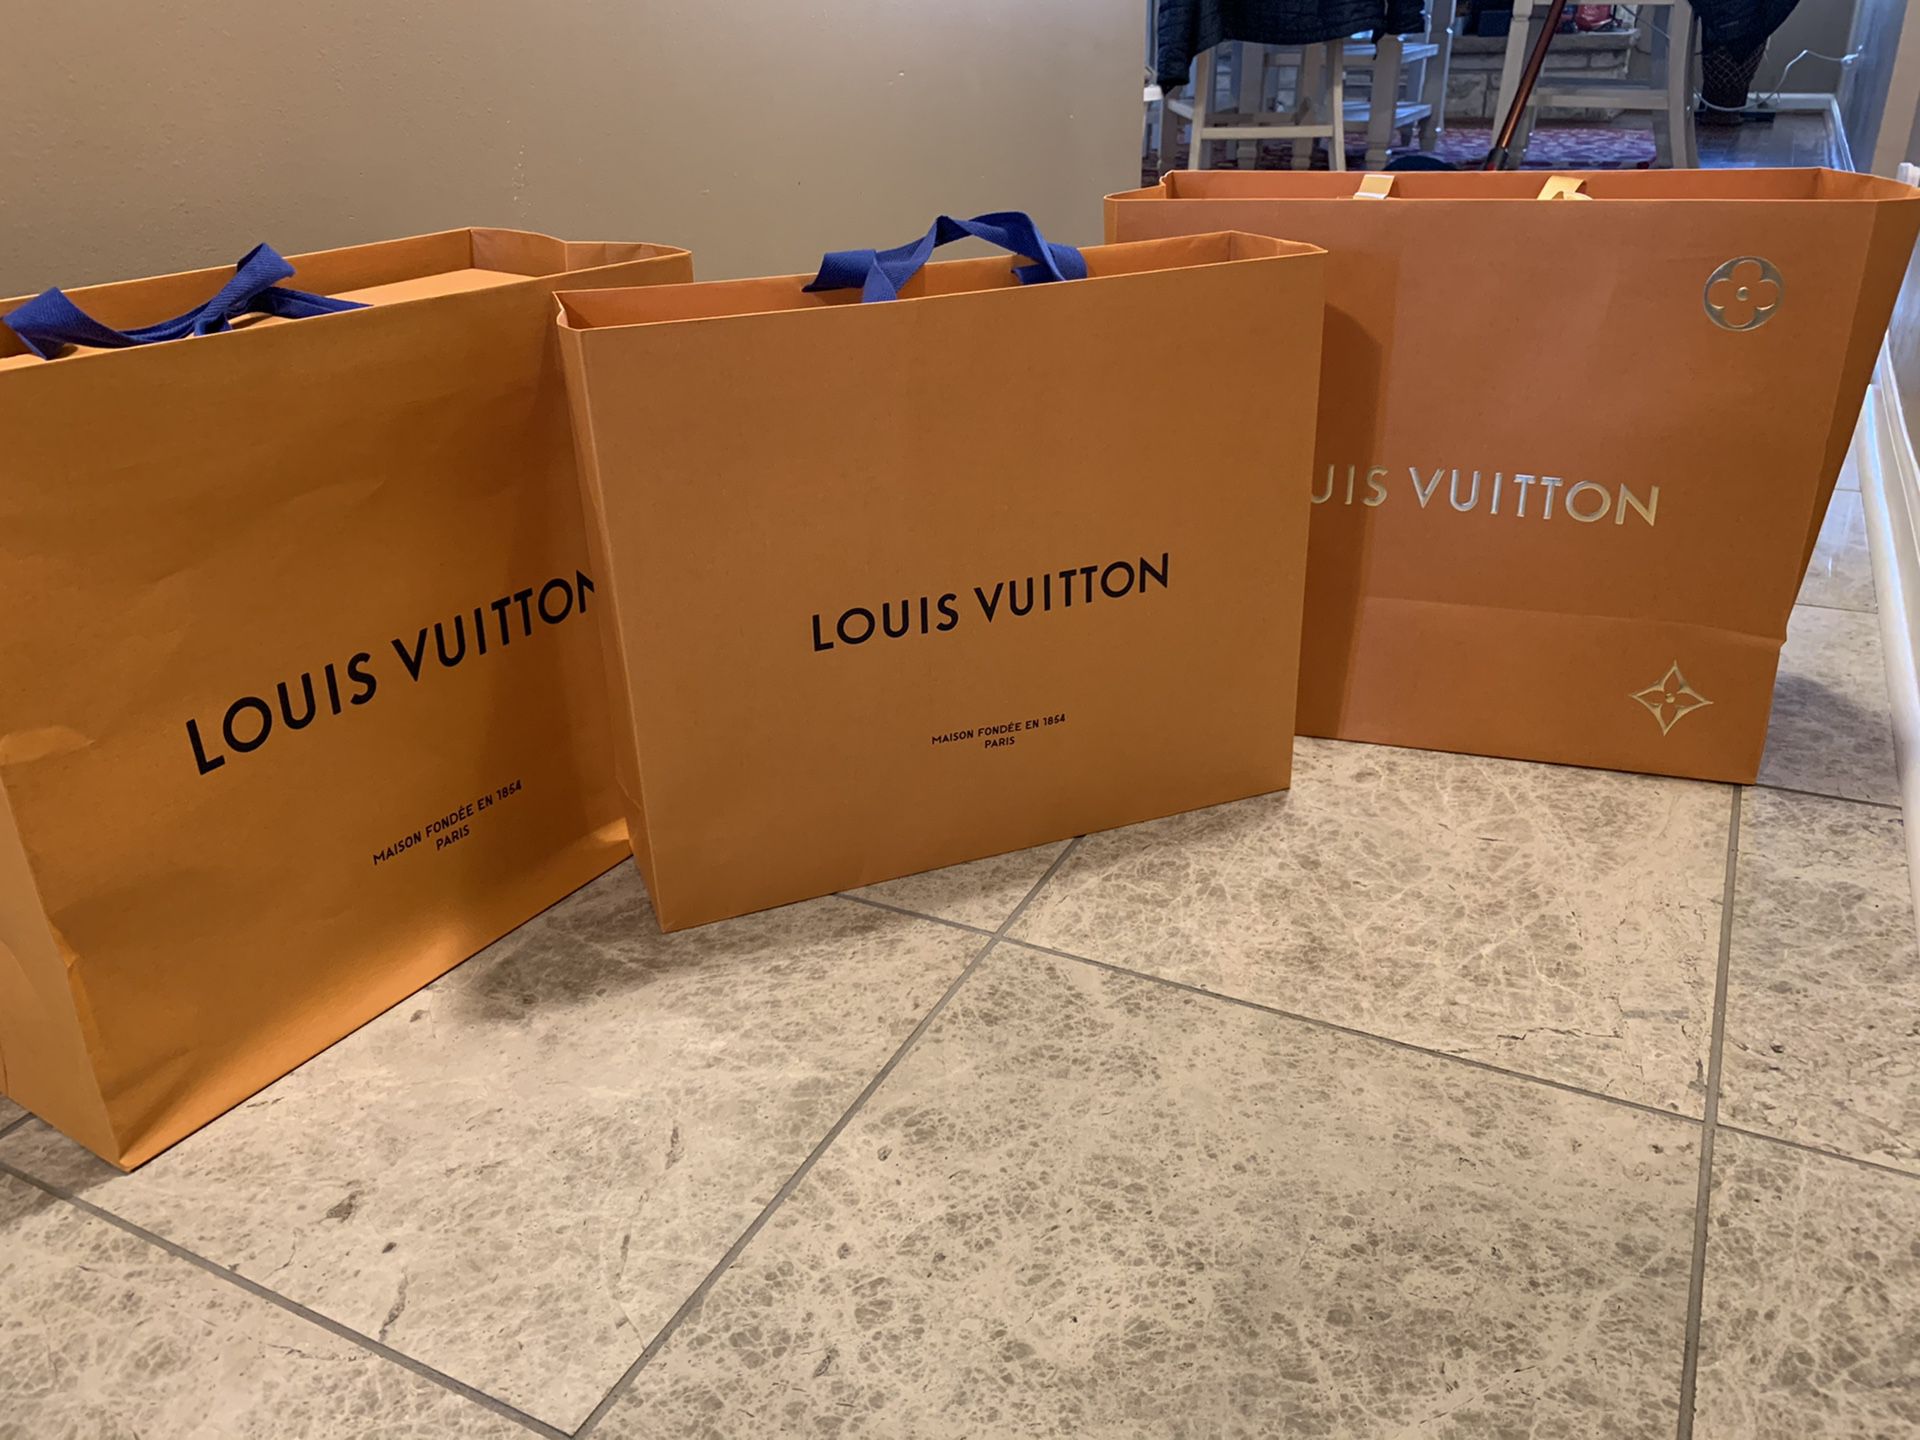 Louis Vuitton shopping bags